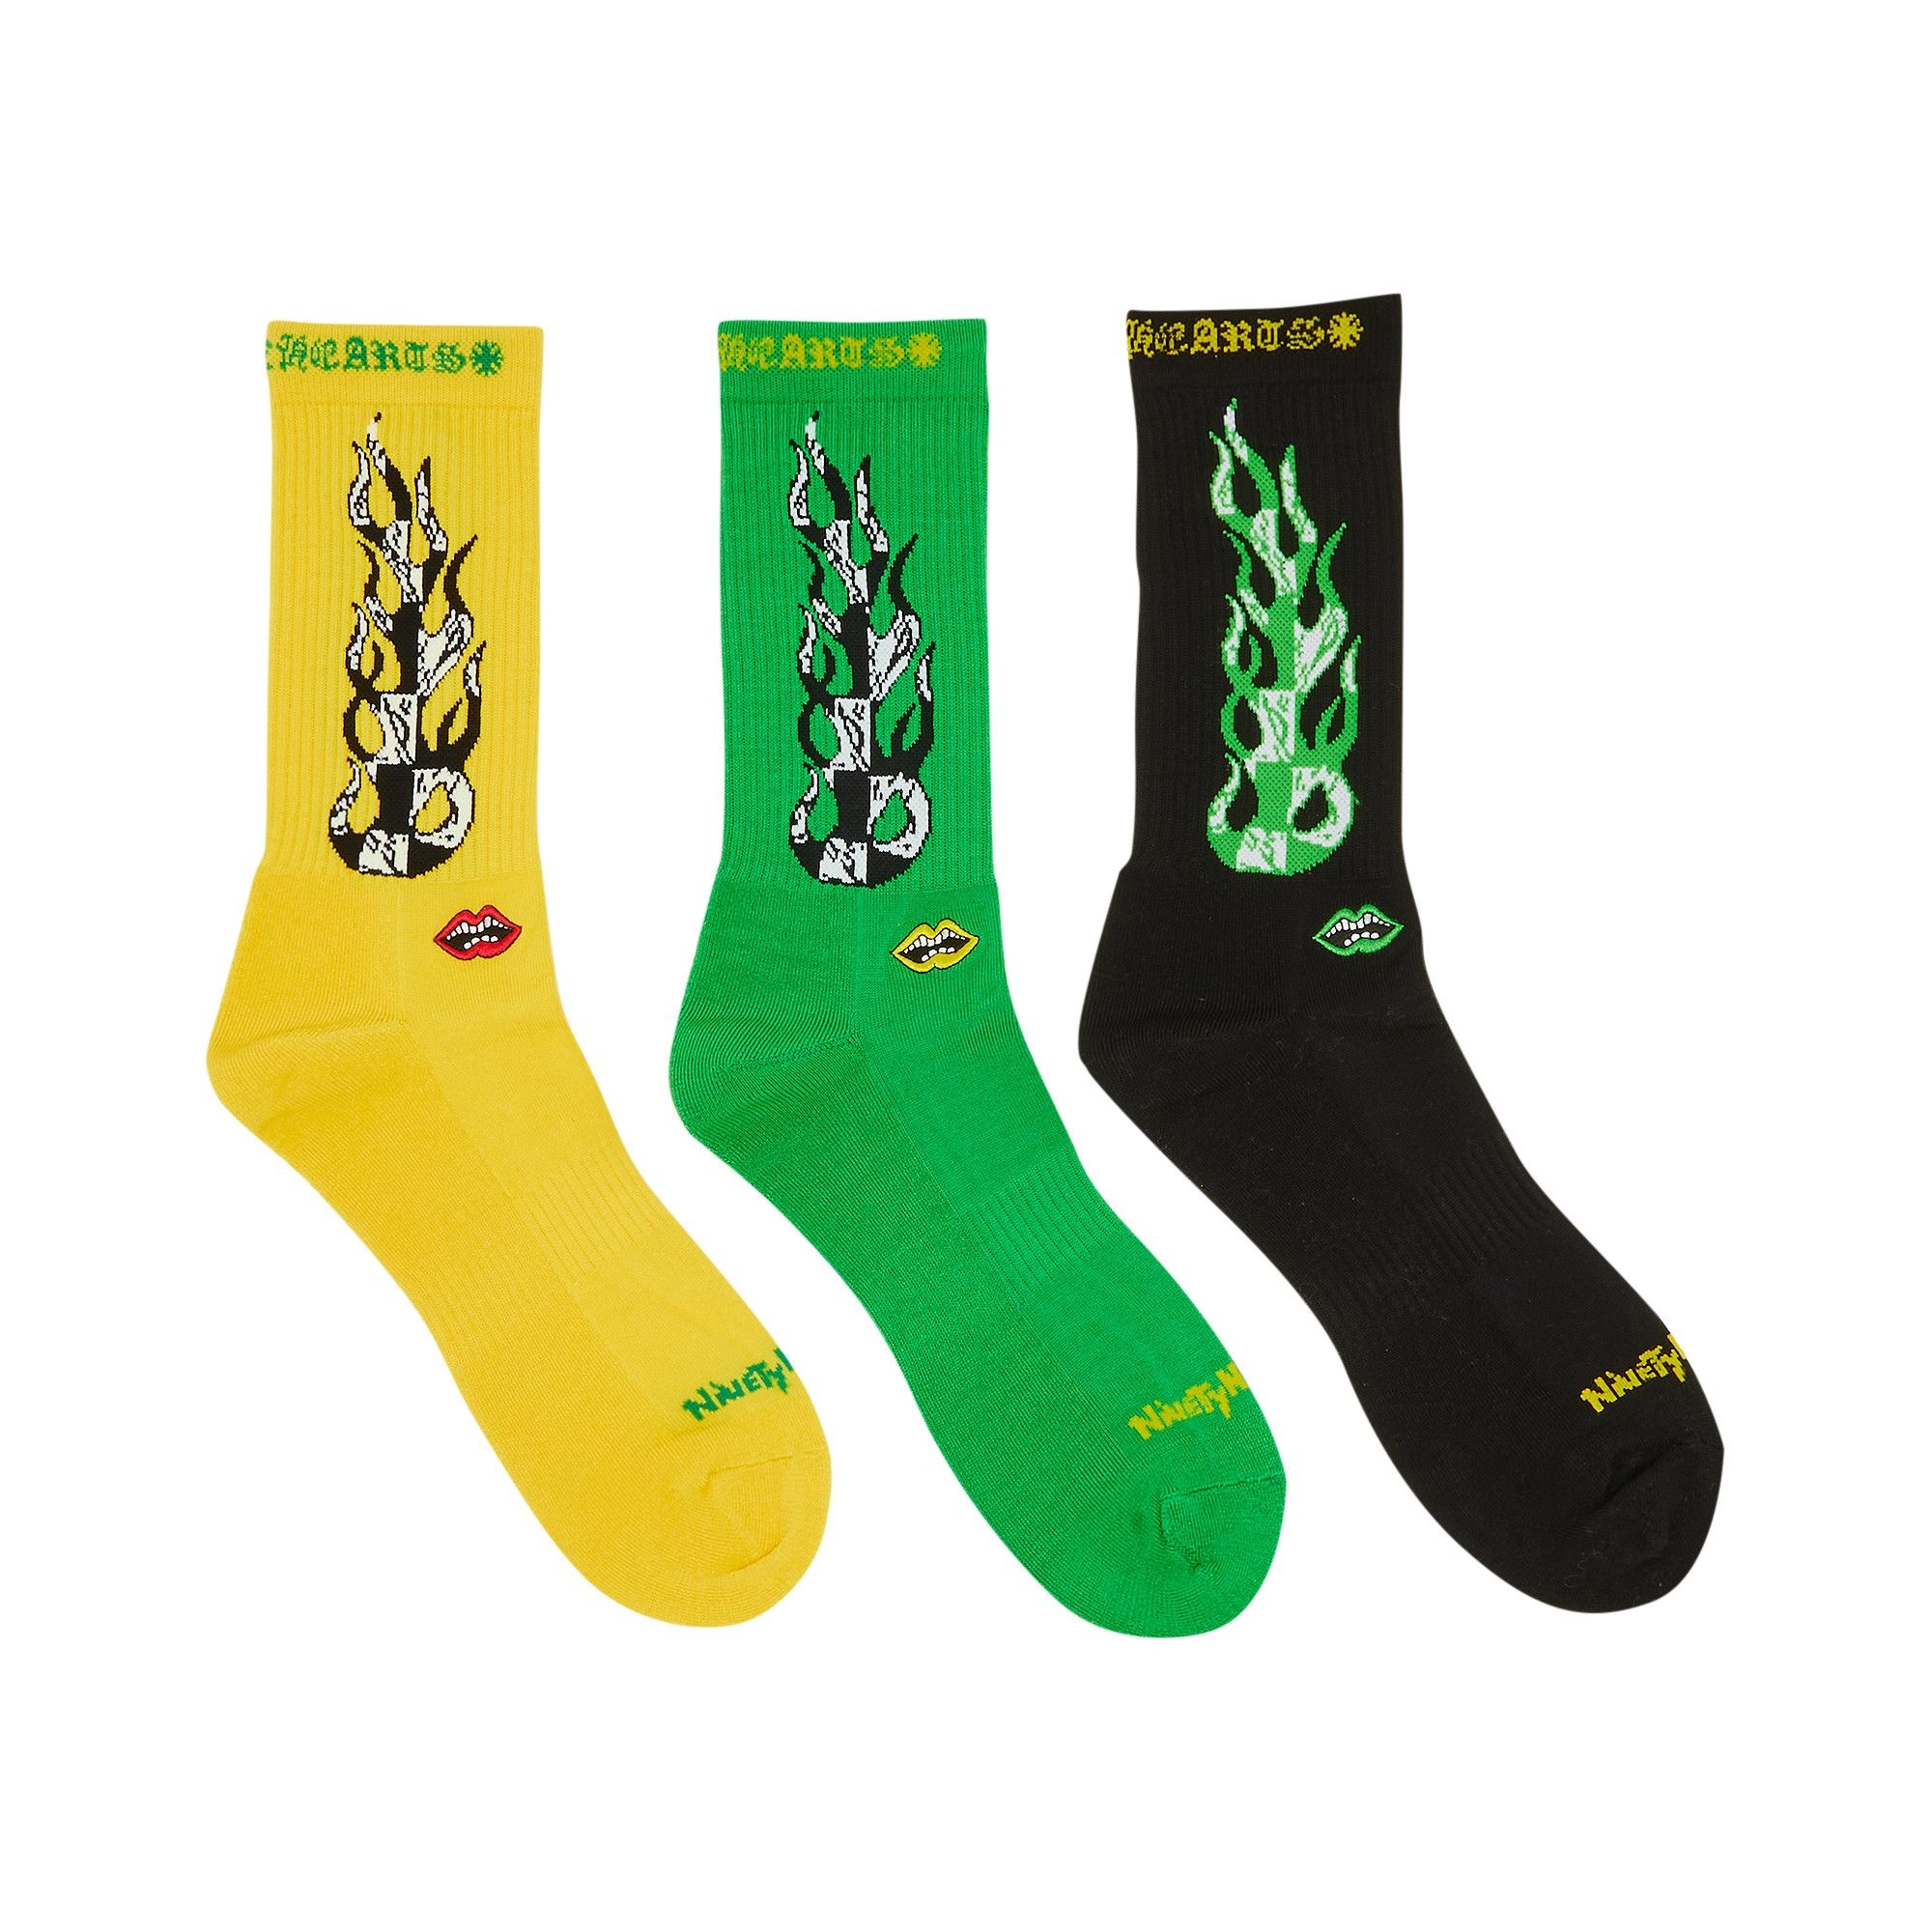 Chrome Hearts x Matty Boy Flame Socks 'Green/Yellow/Black' - 1